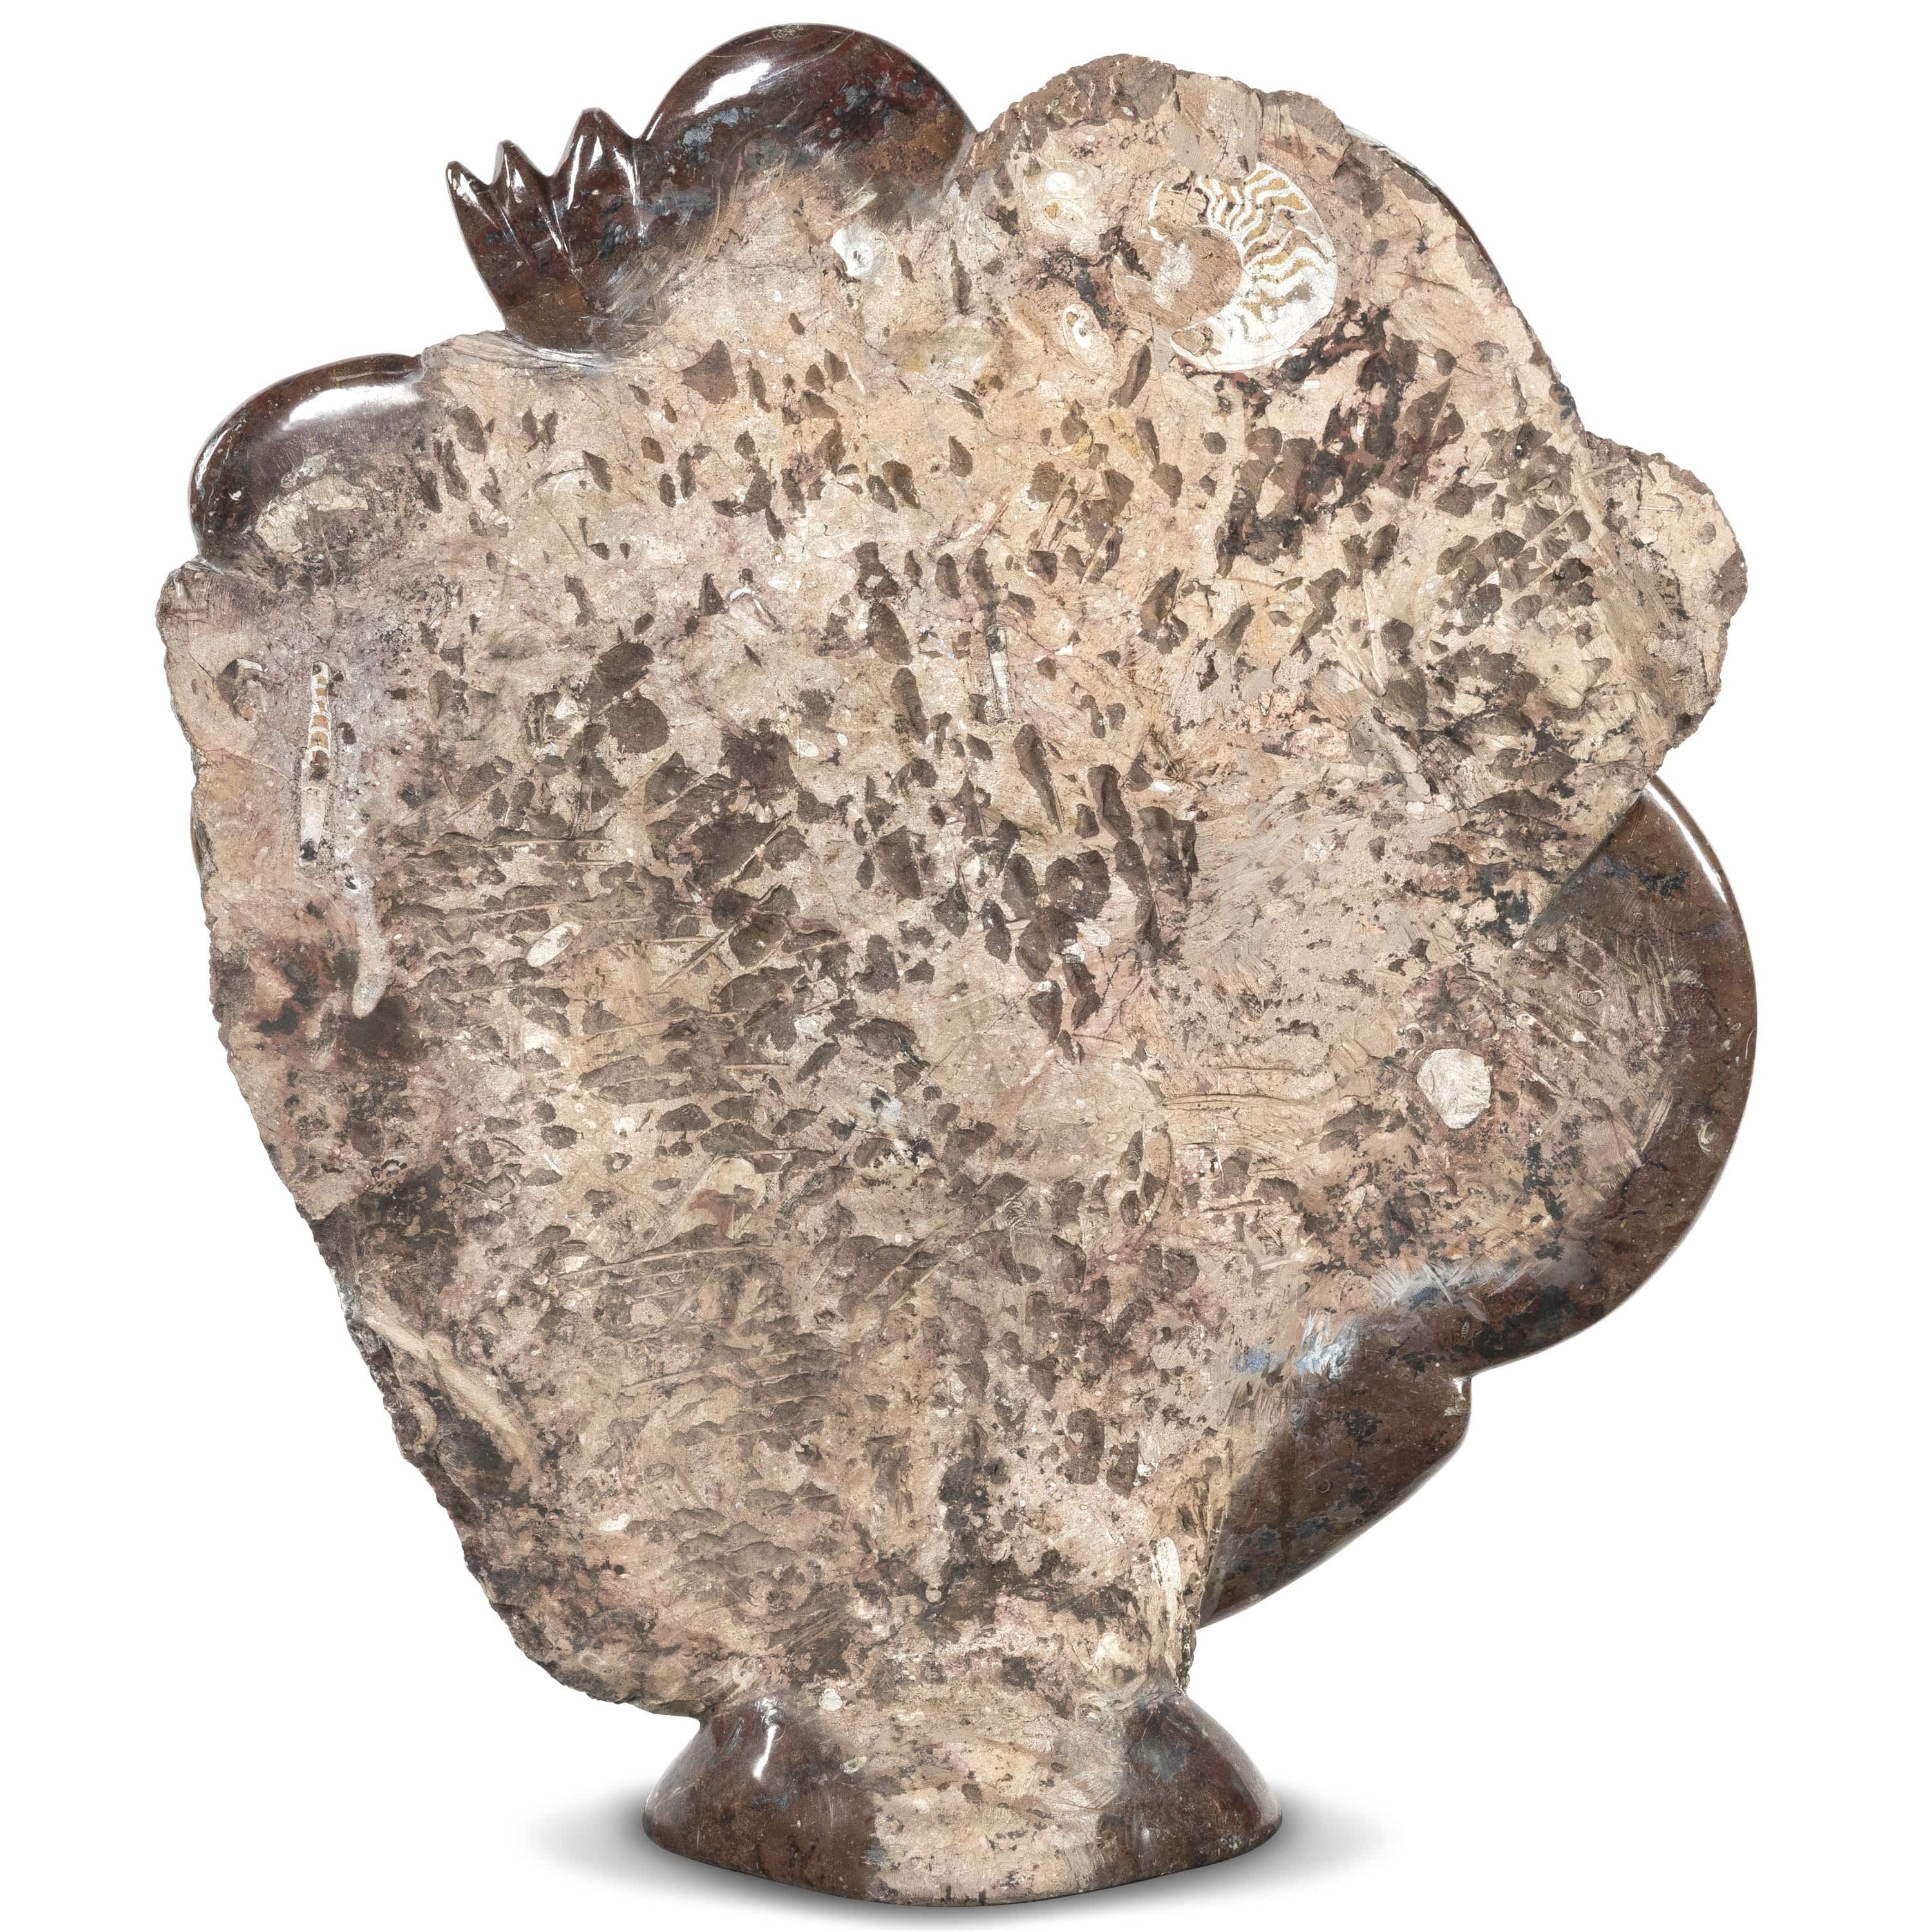 Kalifano Ammonites & Orthoceras Moroccan Ammonite & Orthoceras Fossil - 47 in AMOR48000.001